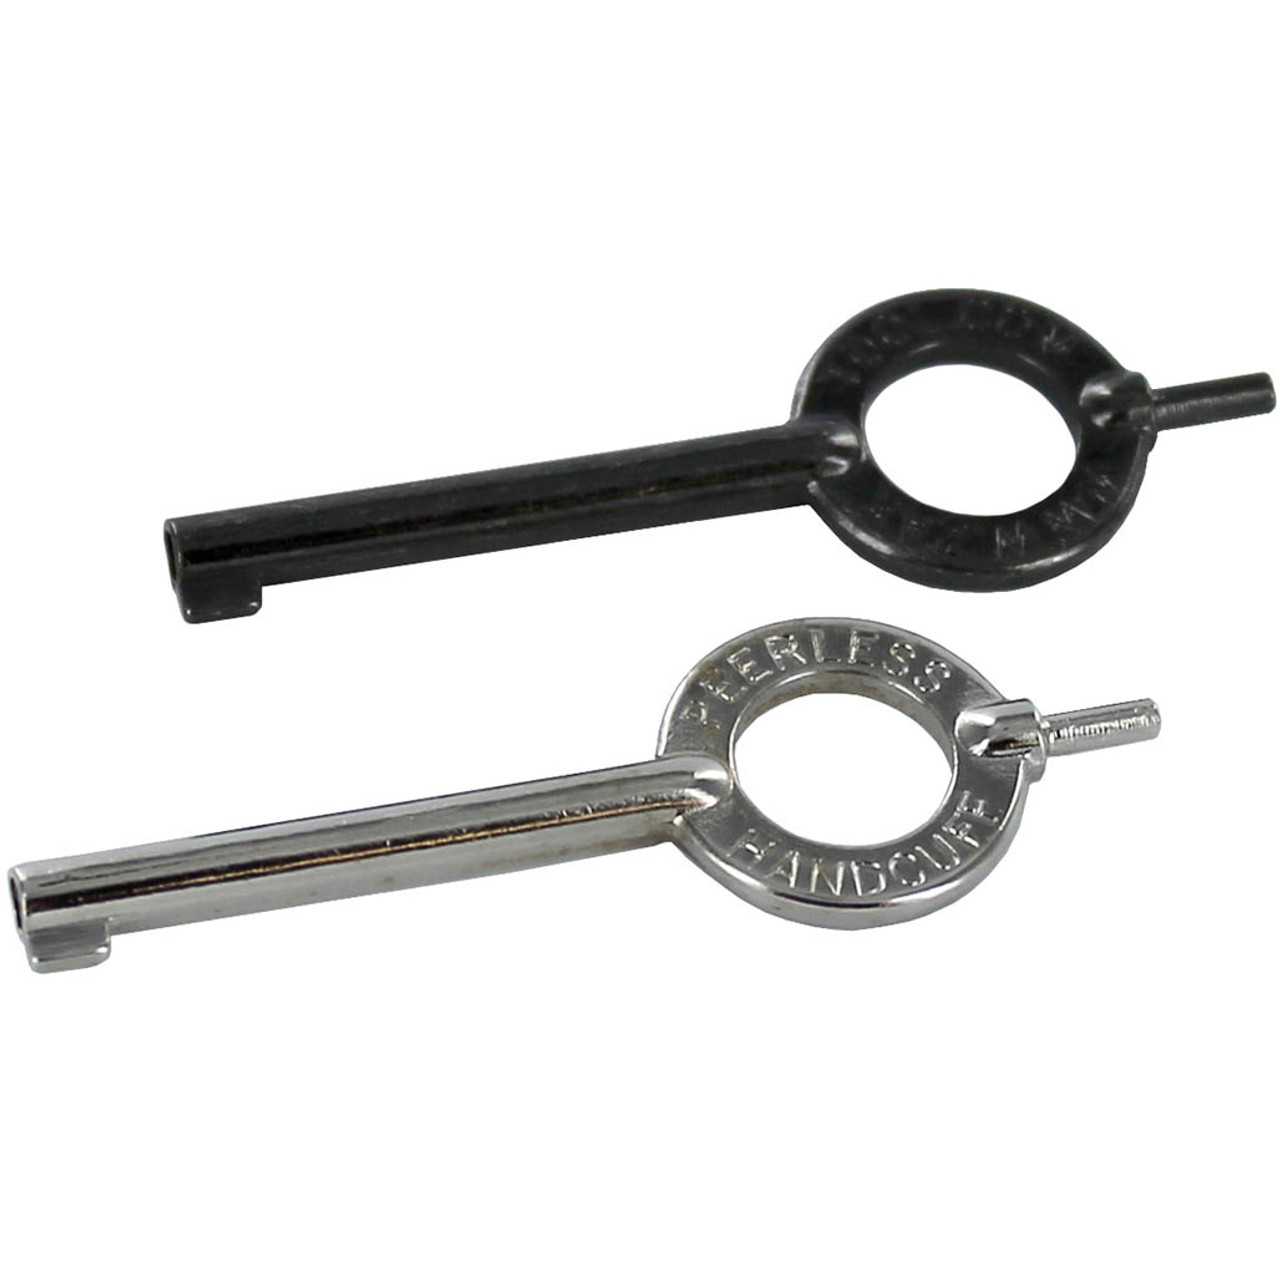 Peerless PR-4100 Handcuff Key, Silver, Standard Size, 1 Each